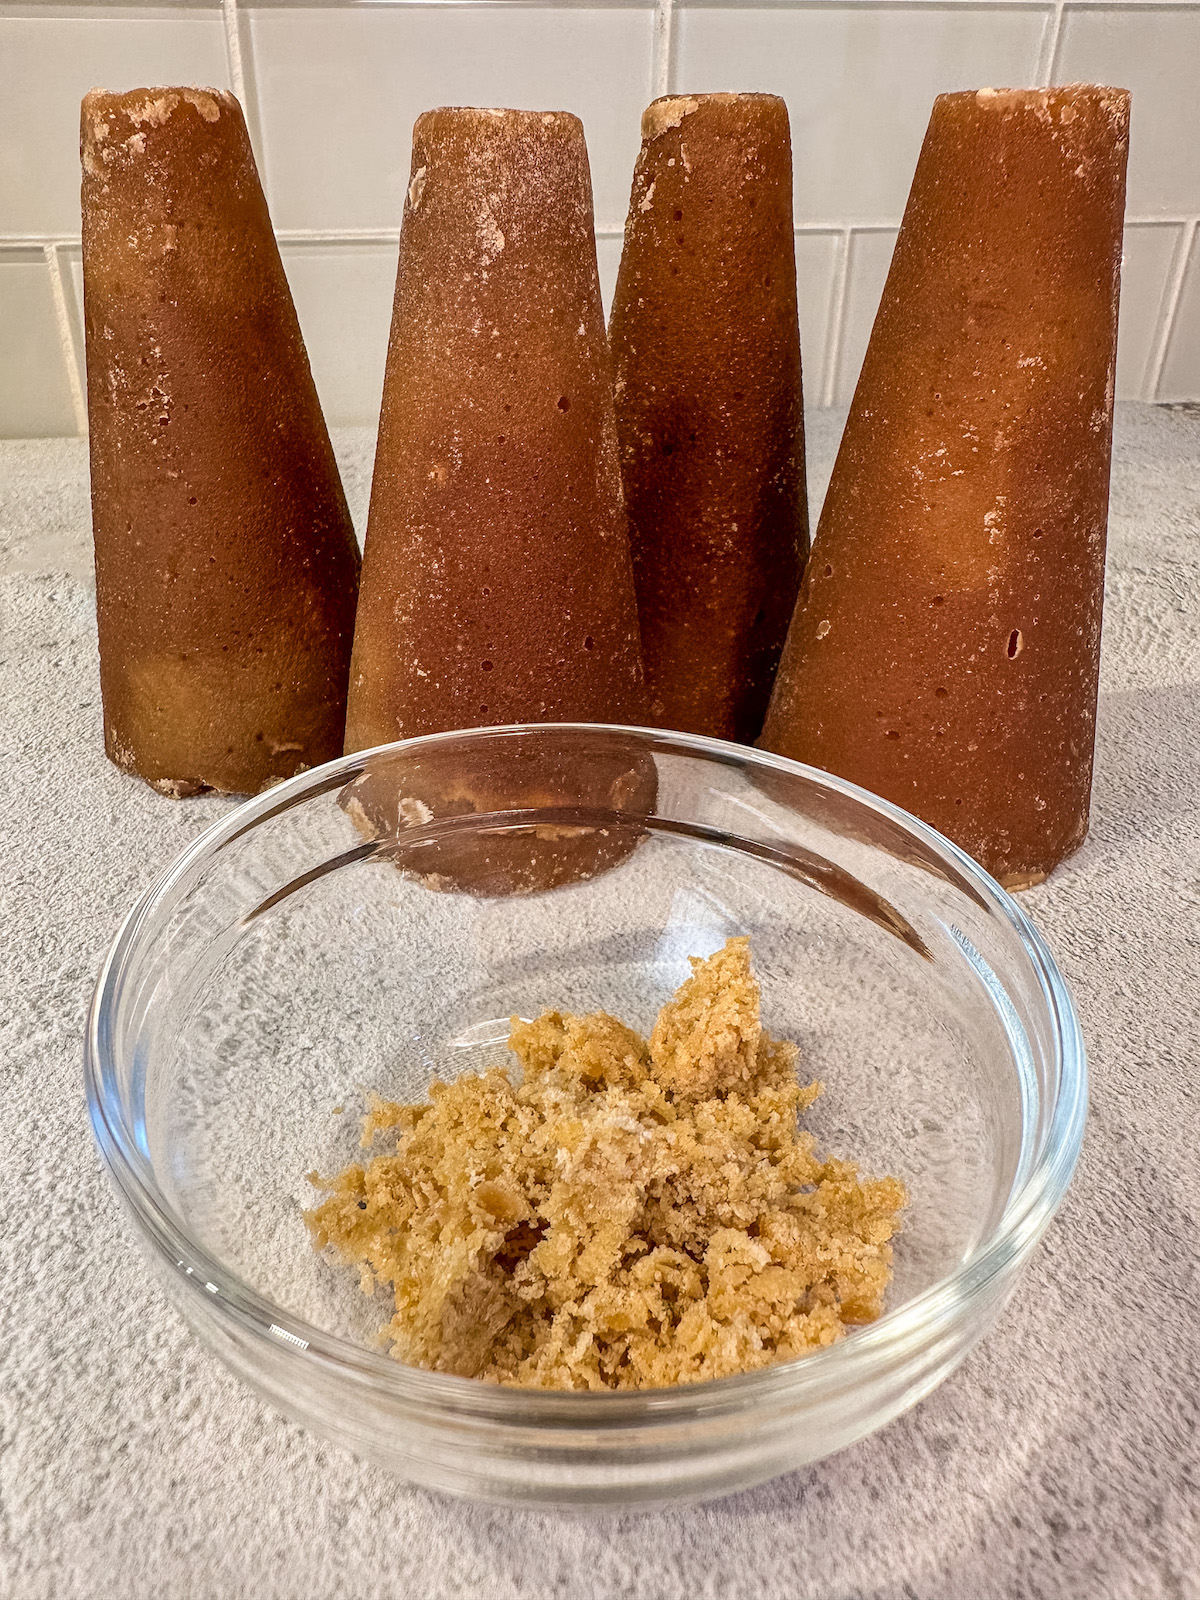 Four Piloncillo sugar cones behind a bowl of grated Piloncillo.